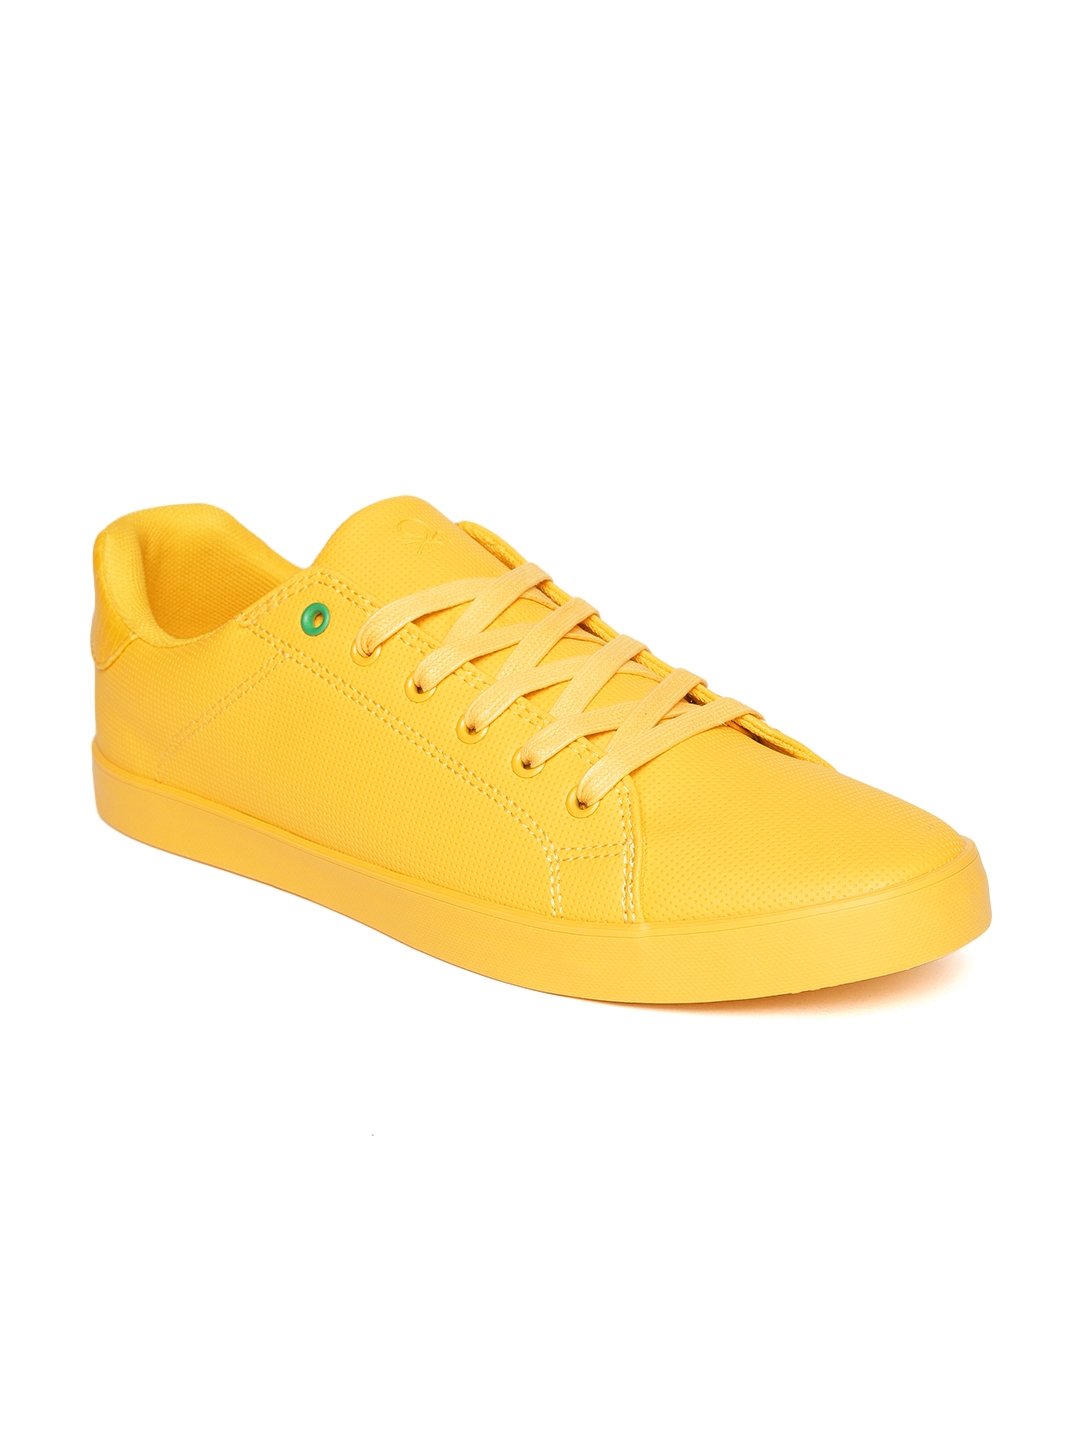 yellow sneakers men